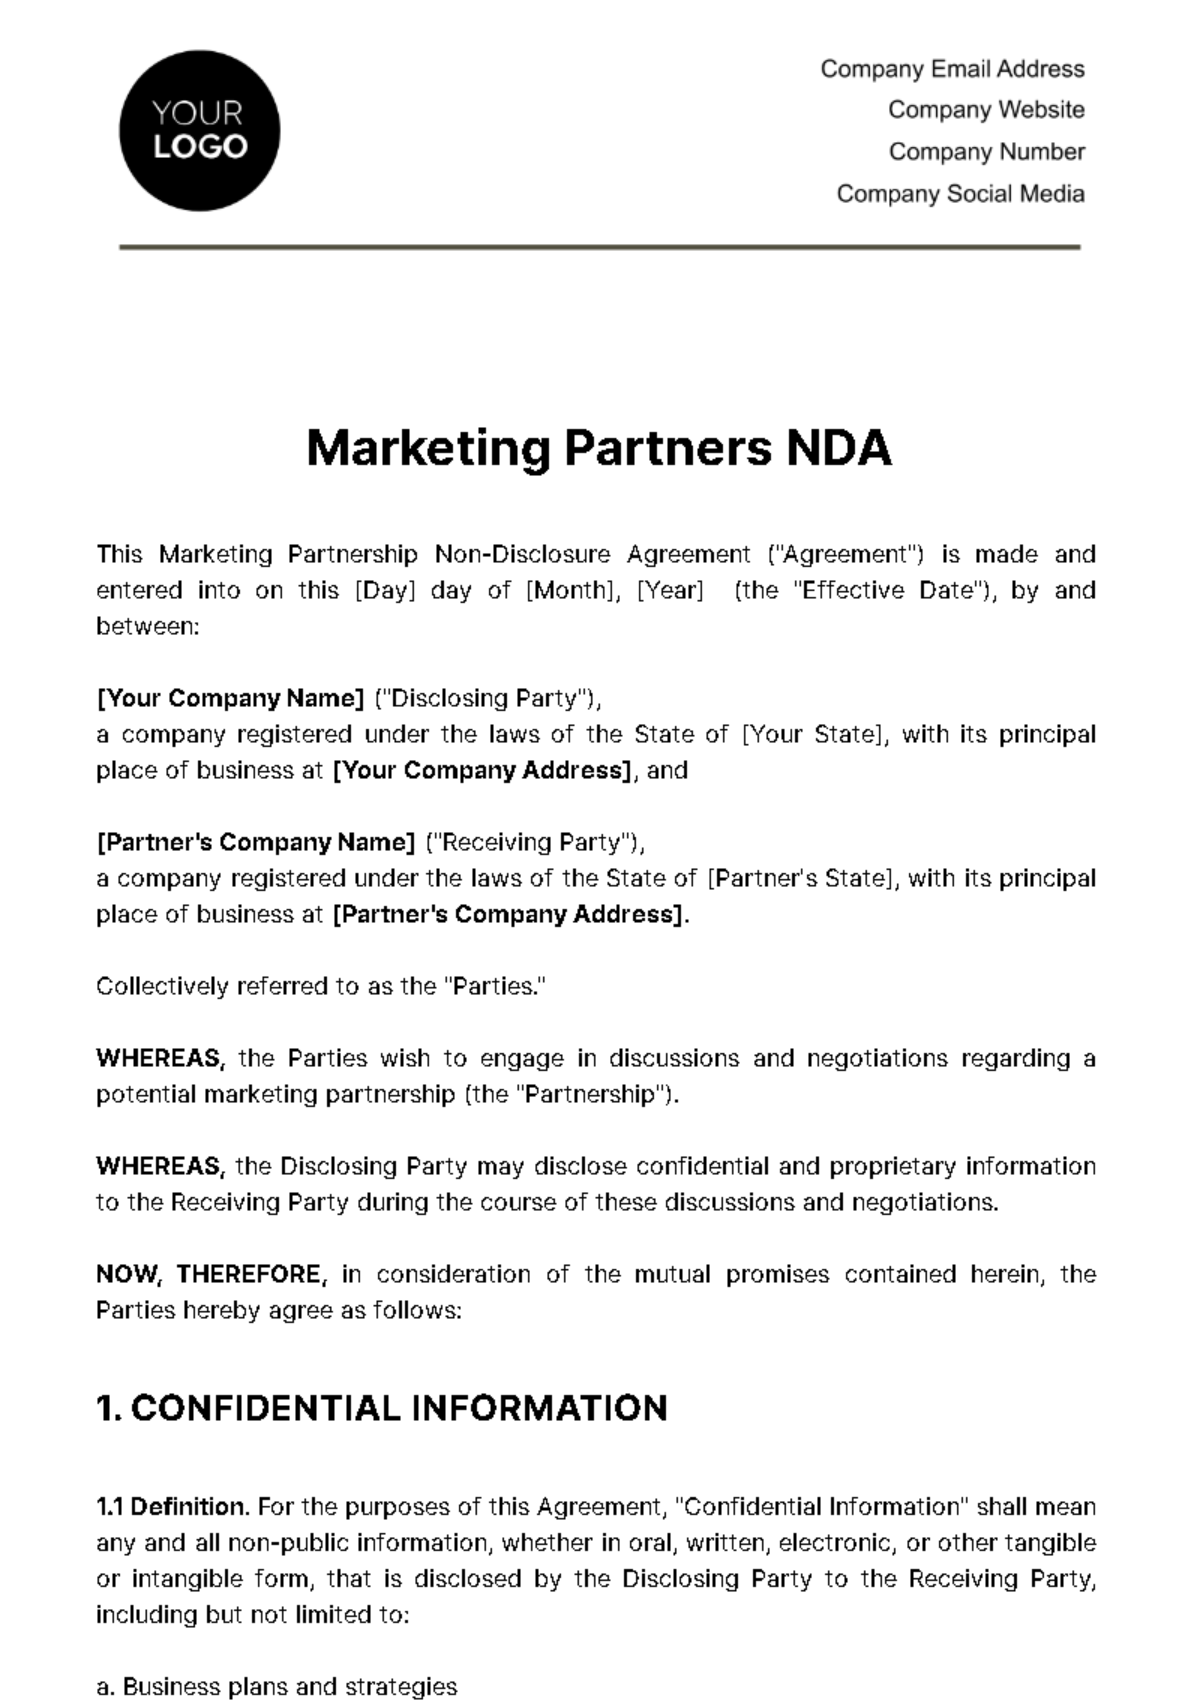 Marketing Partners NDA Template